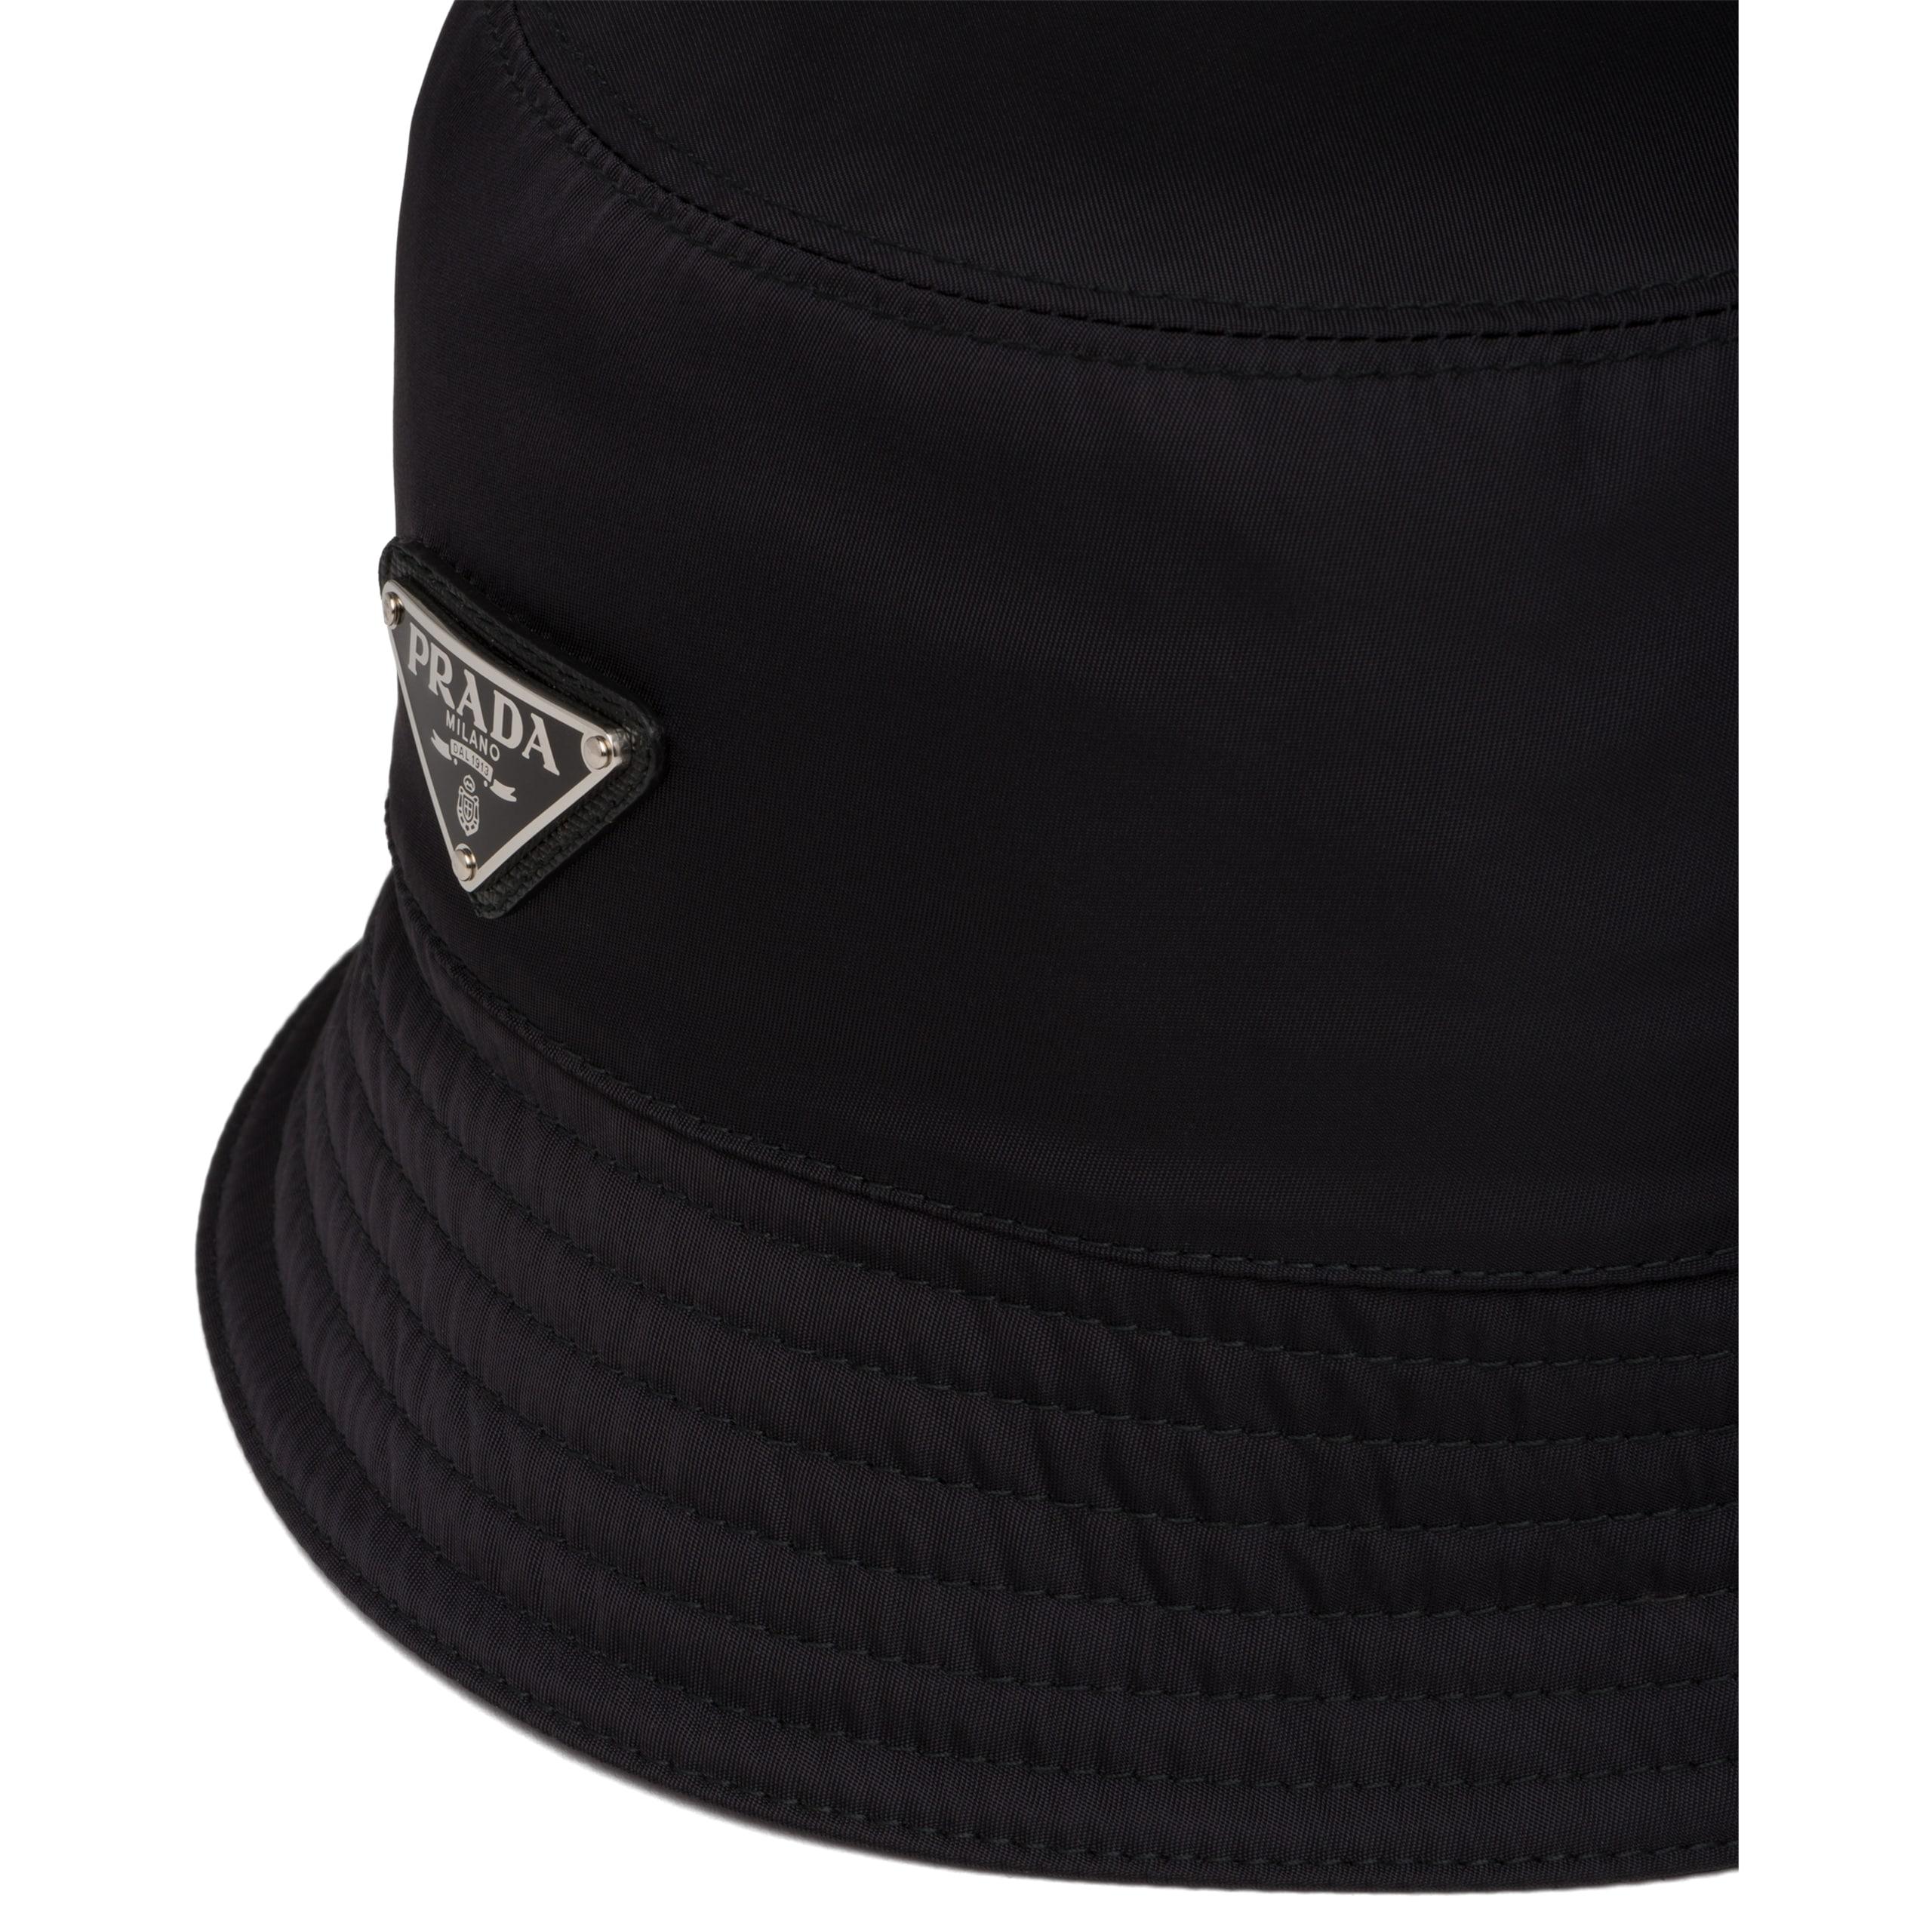 Prada Synthetic Nylon Cap in Black - Lyst